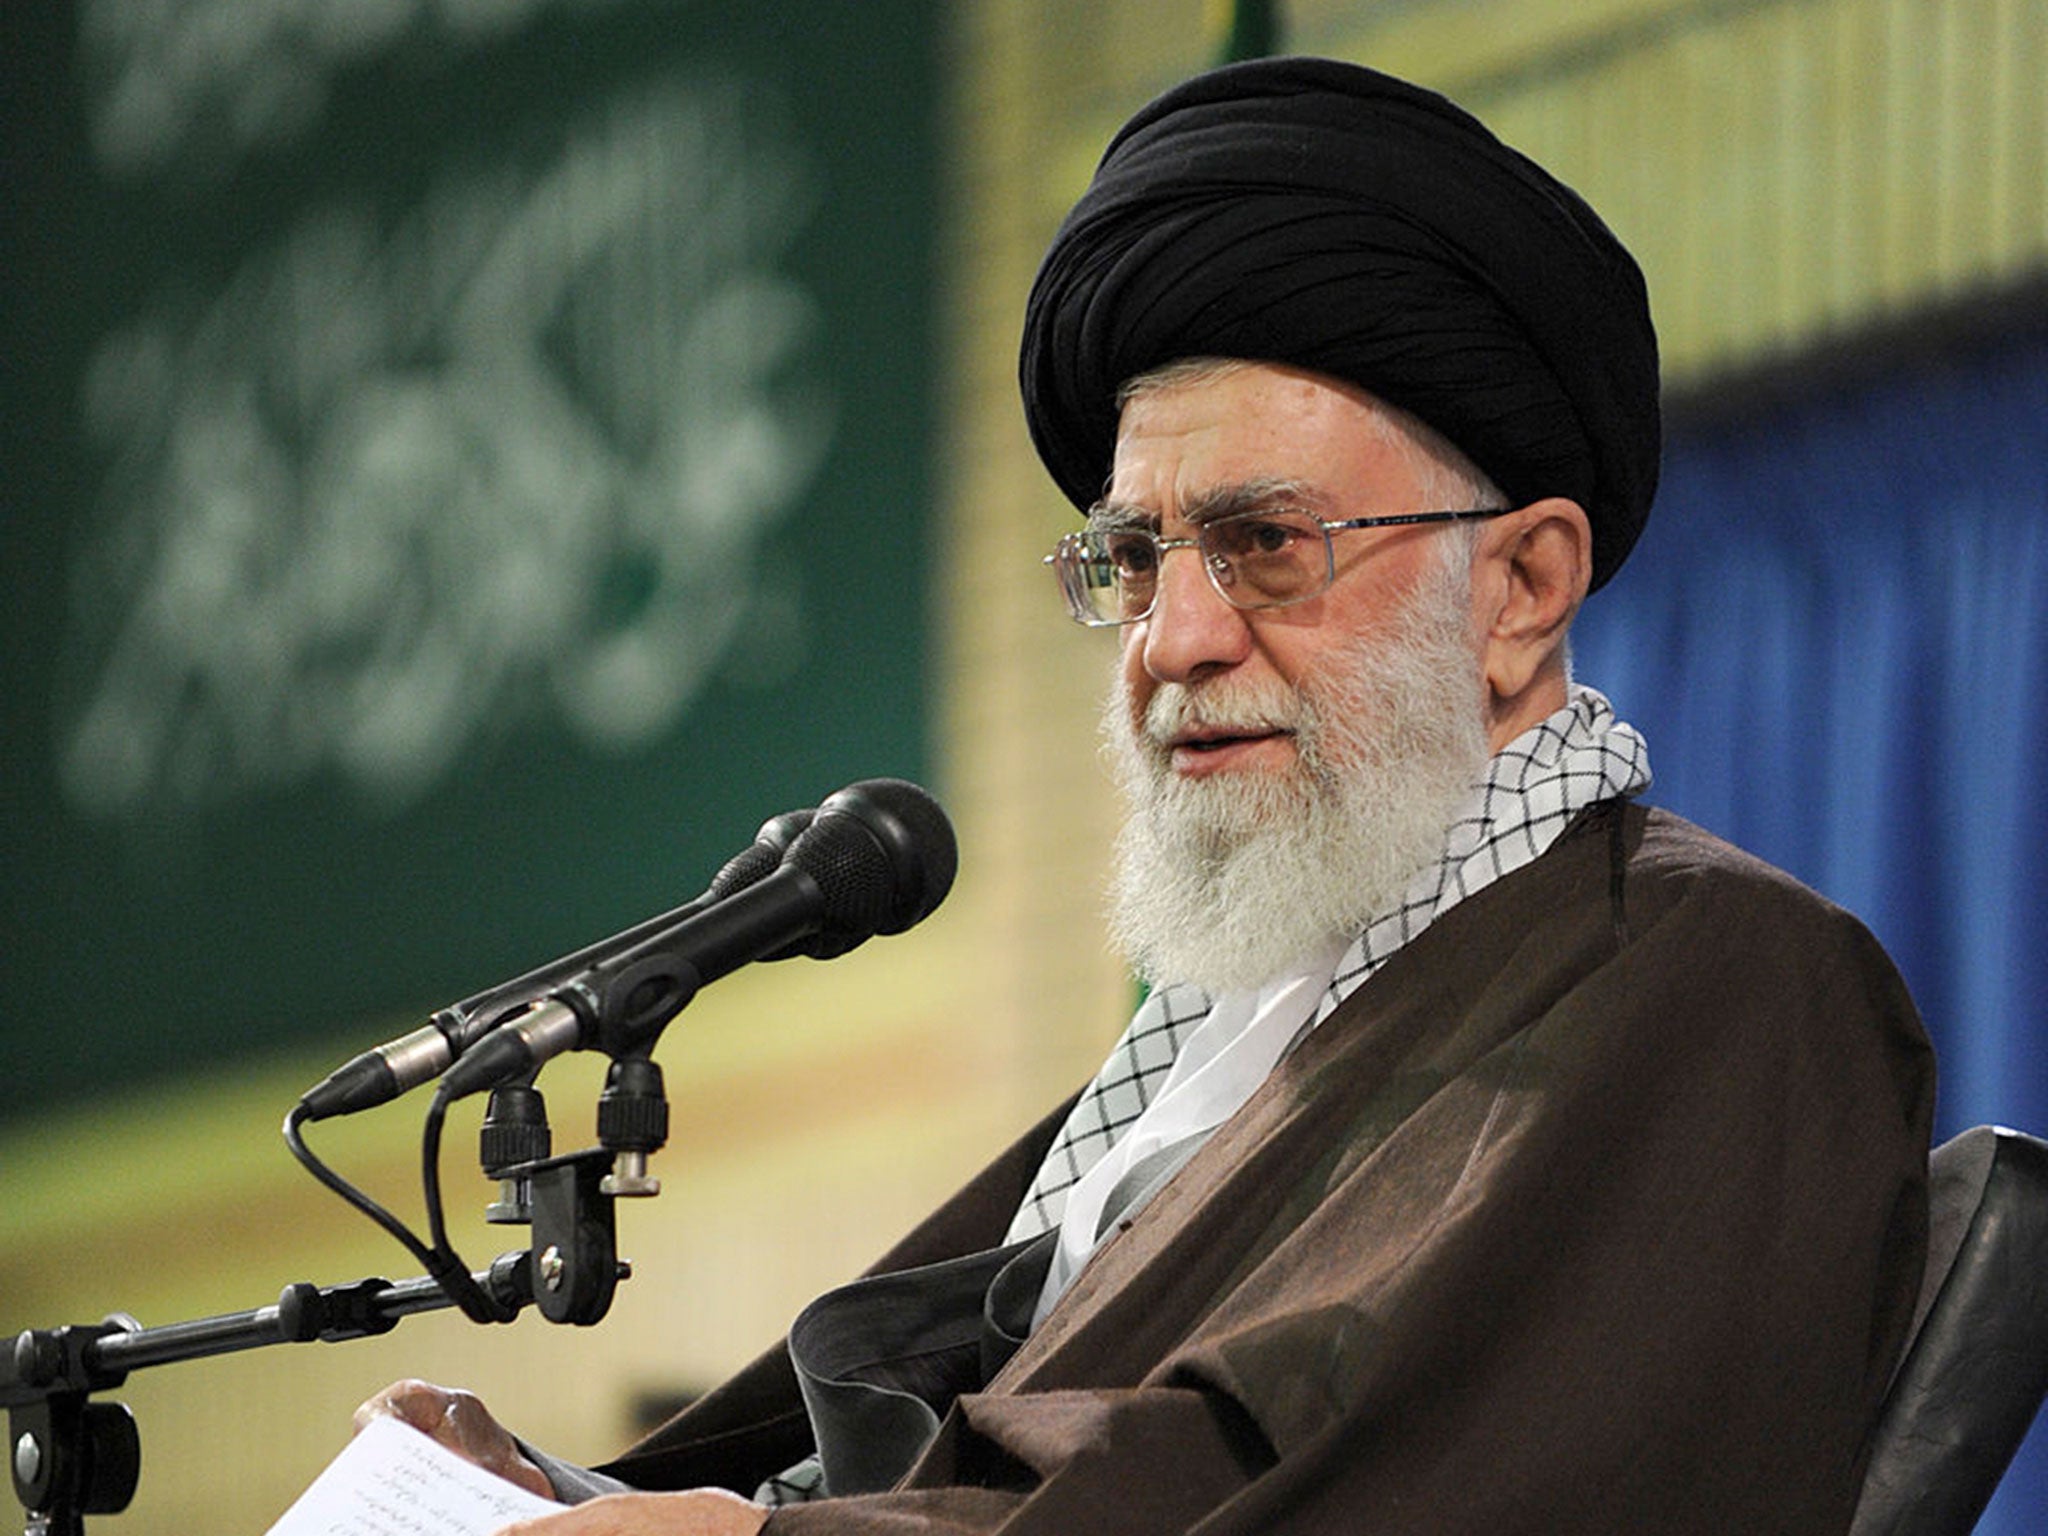 Khamenei ayatollah iran ali leader supreme doomed collapse israel says inquirer advocates gun say control ap file solution guns